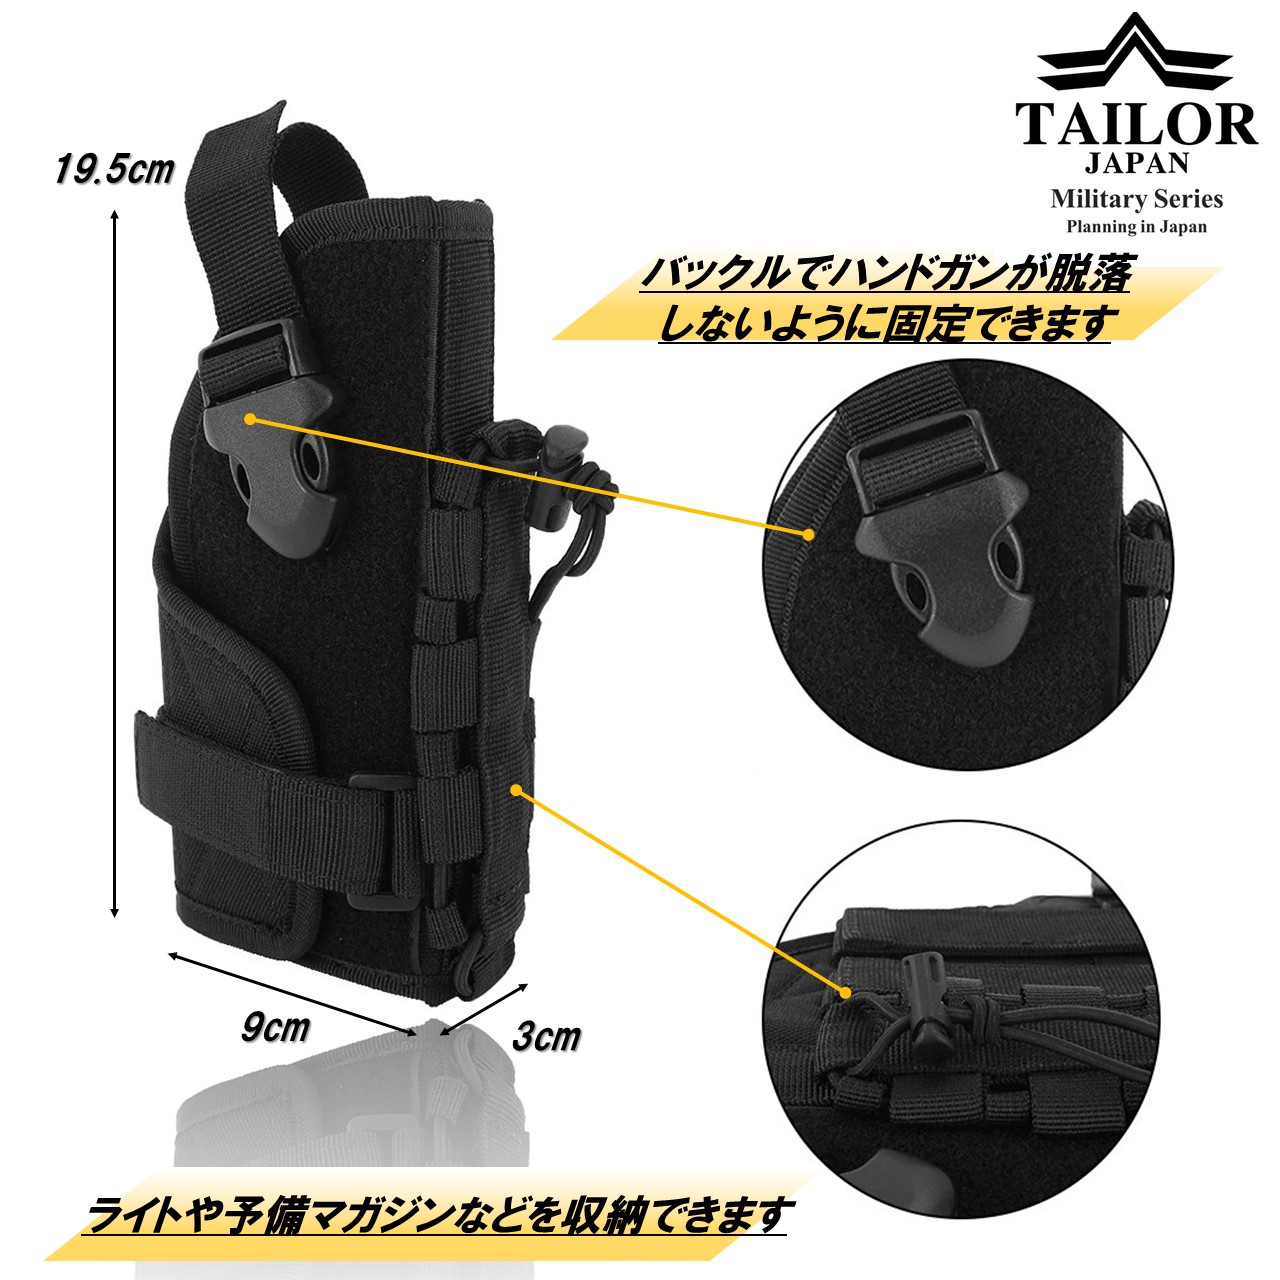 TAILOR JAPAN Taylor Japan hand gun ho ru Star airsoft universal ho ru Star right profit . for 